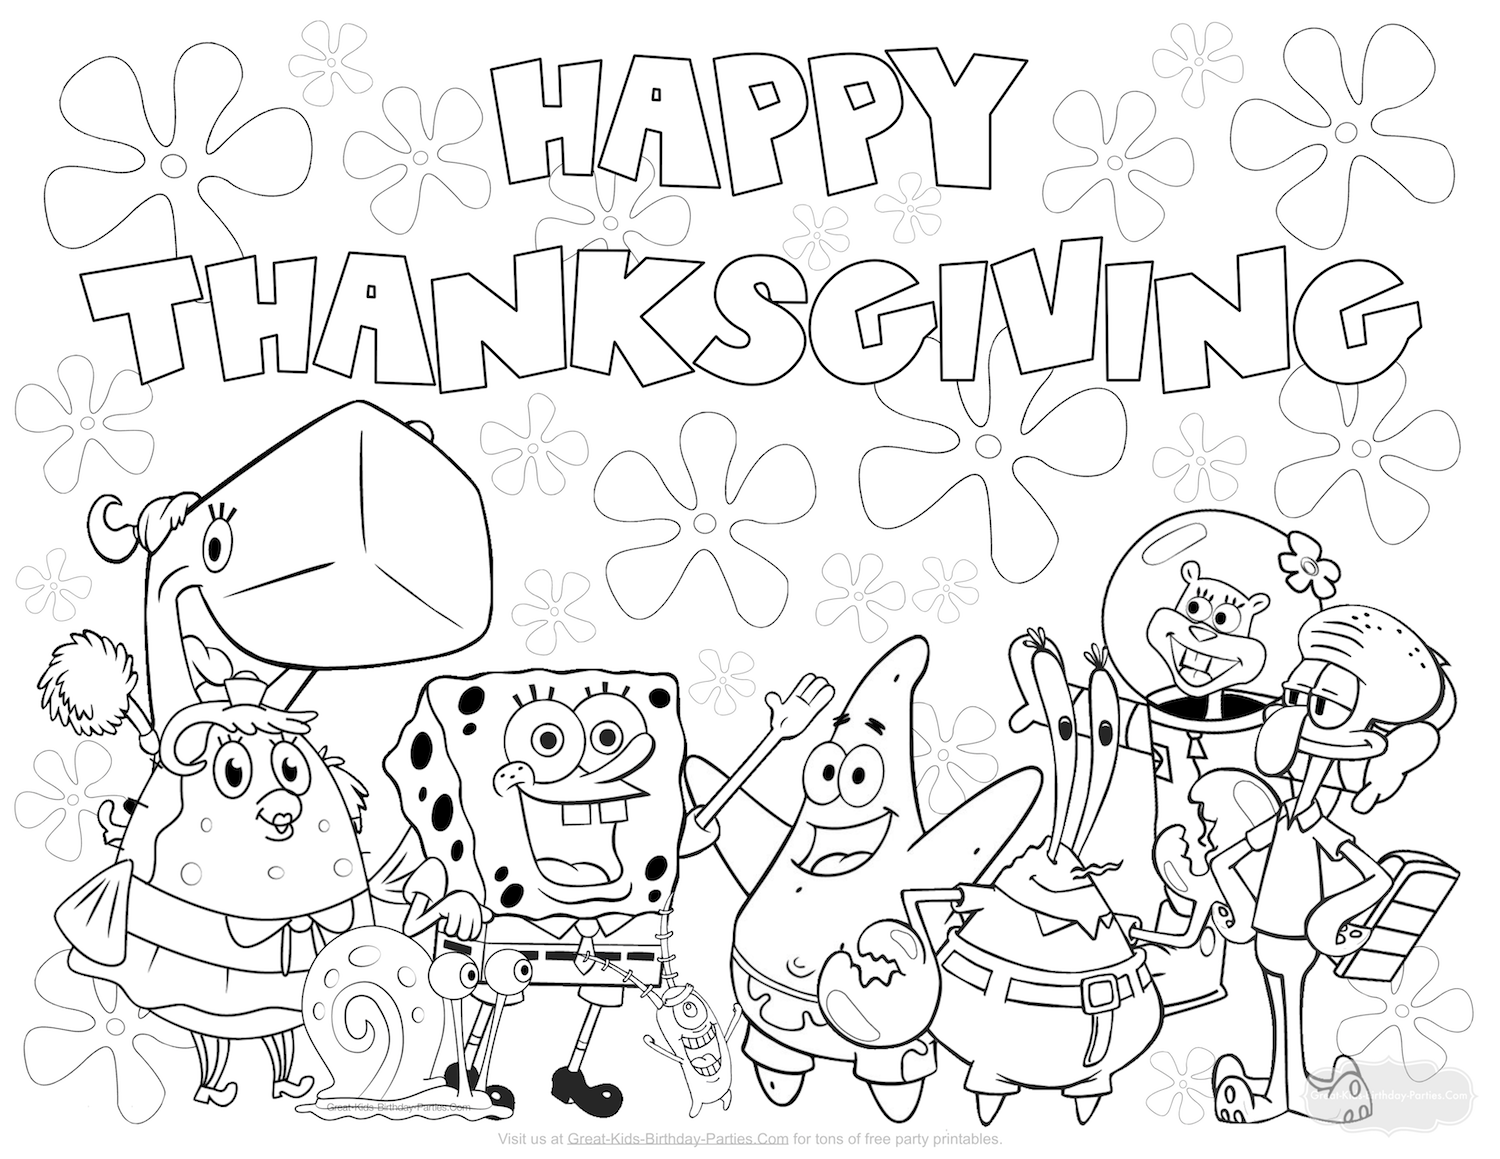 Spongebob Thanksgiving coloring page